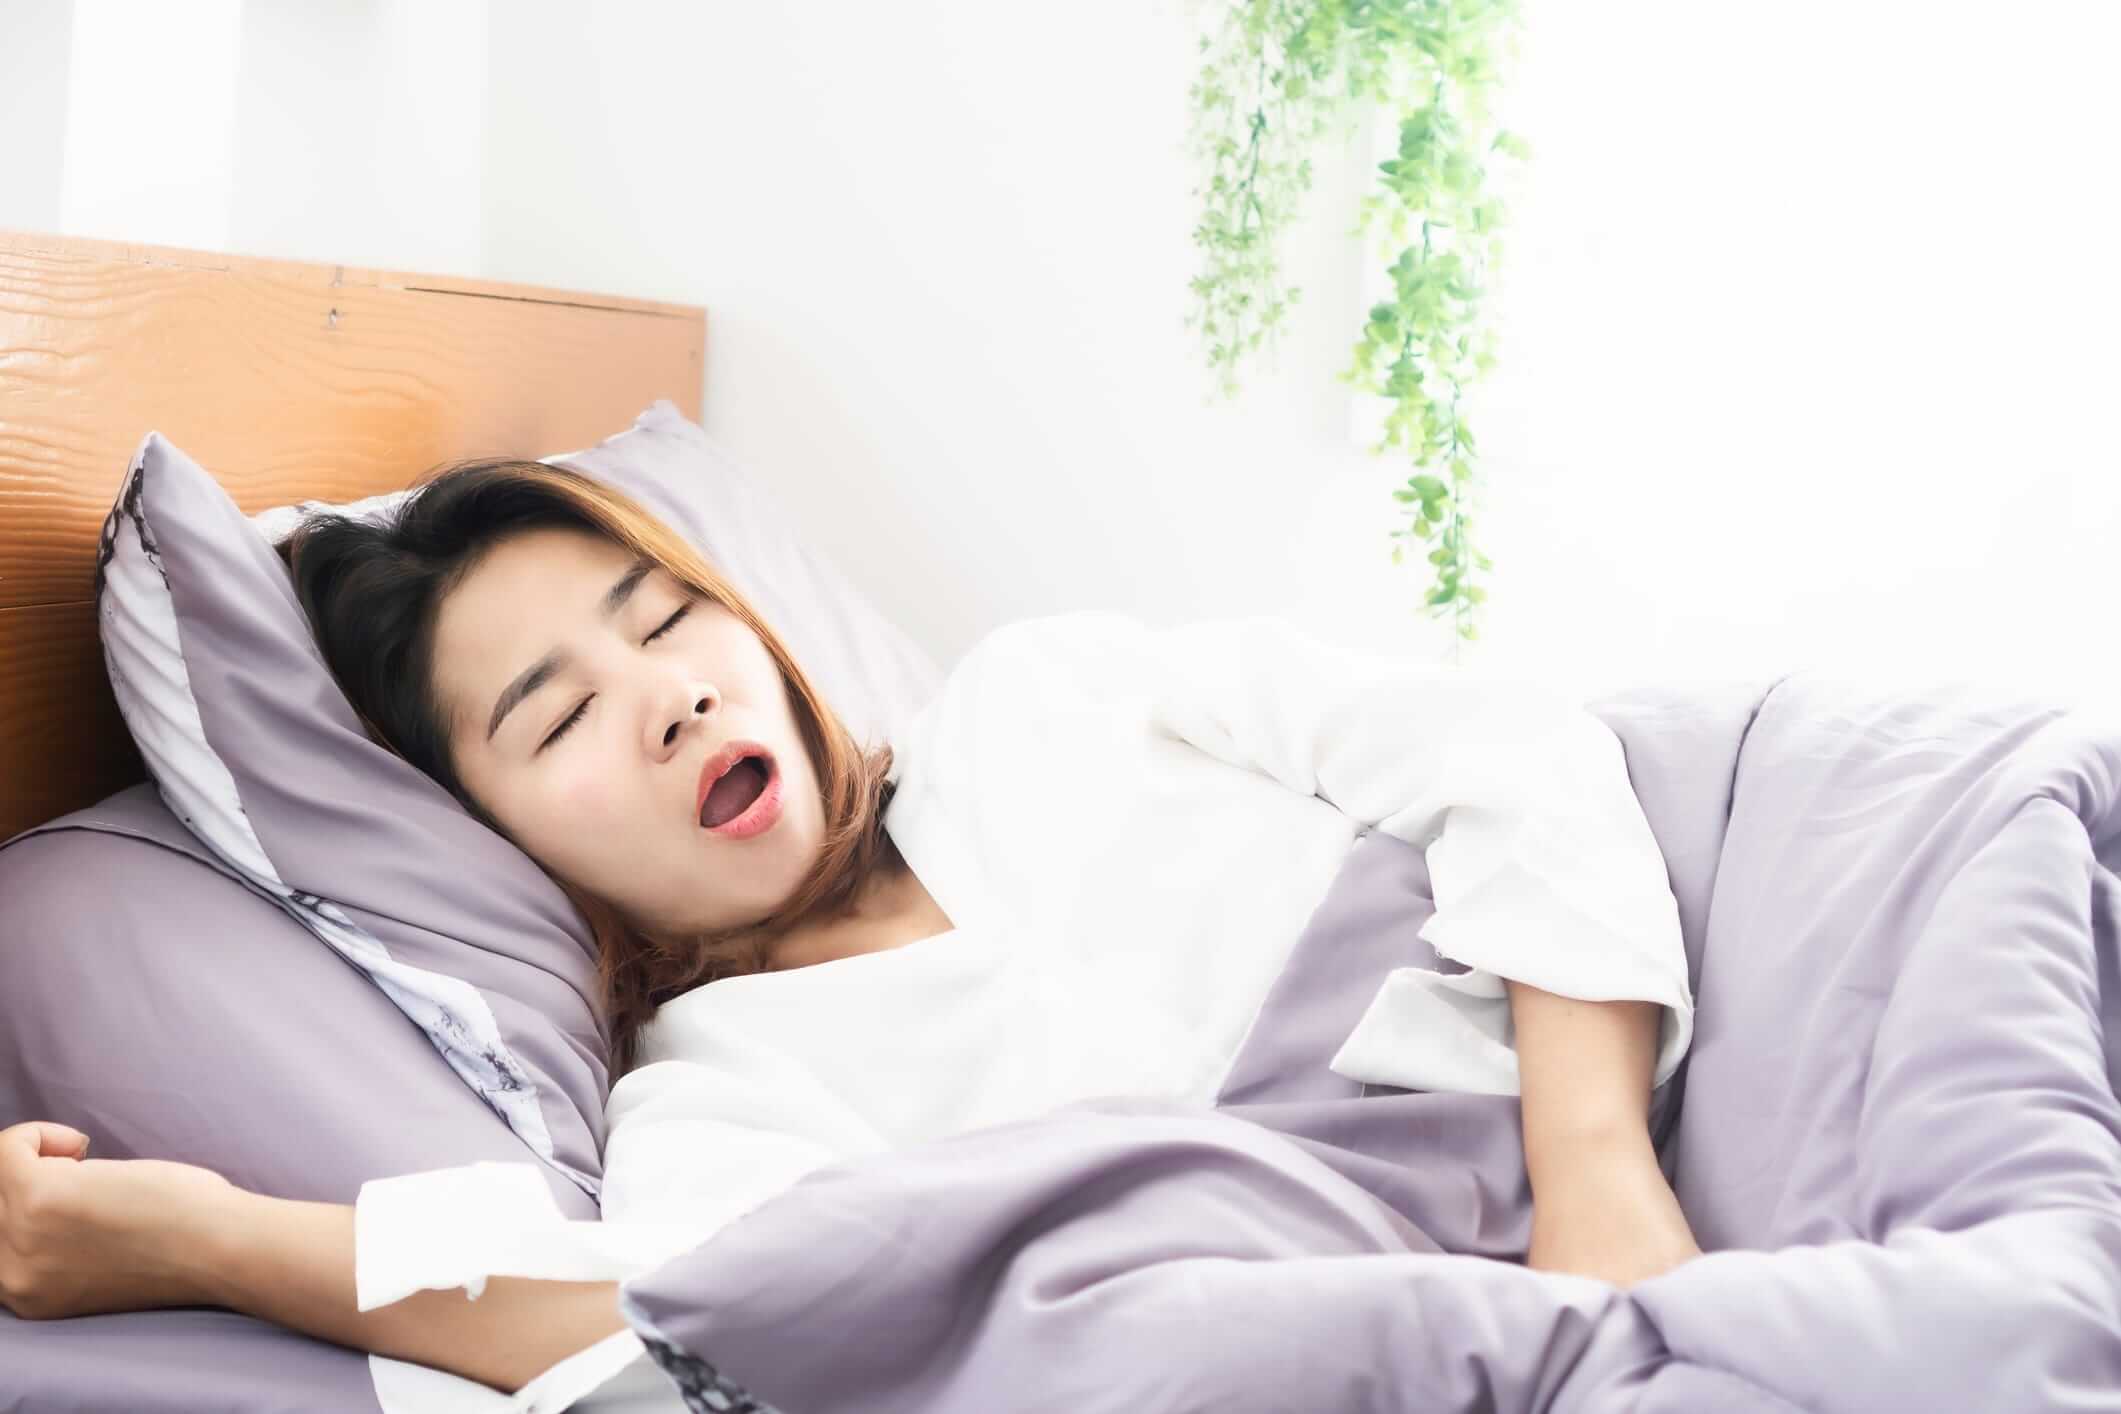 Women Actually Snore More Than Men, According to Mintal Sleep Tracker Data